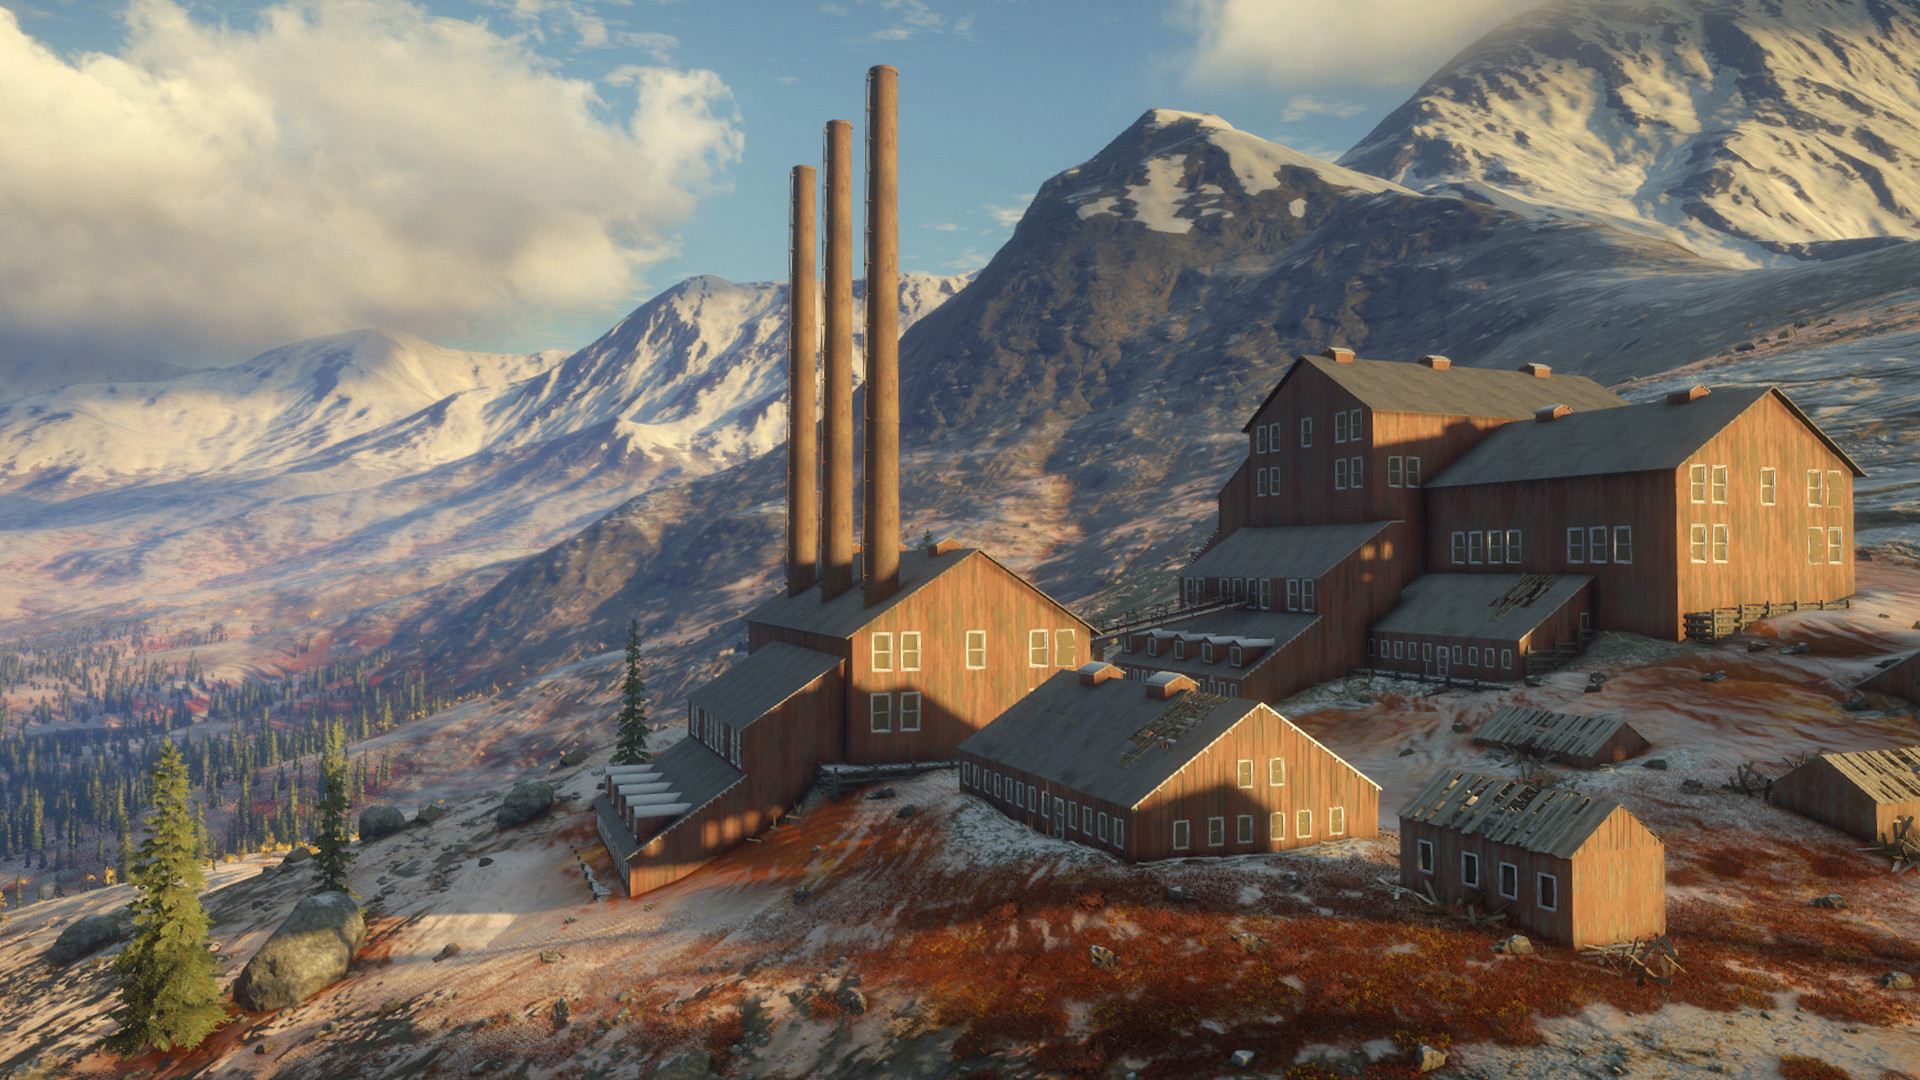 TheHunter: Call Of The Wild - Yukon Valley Steam CD Key